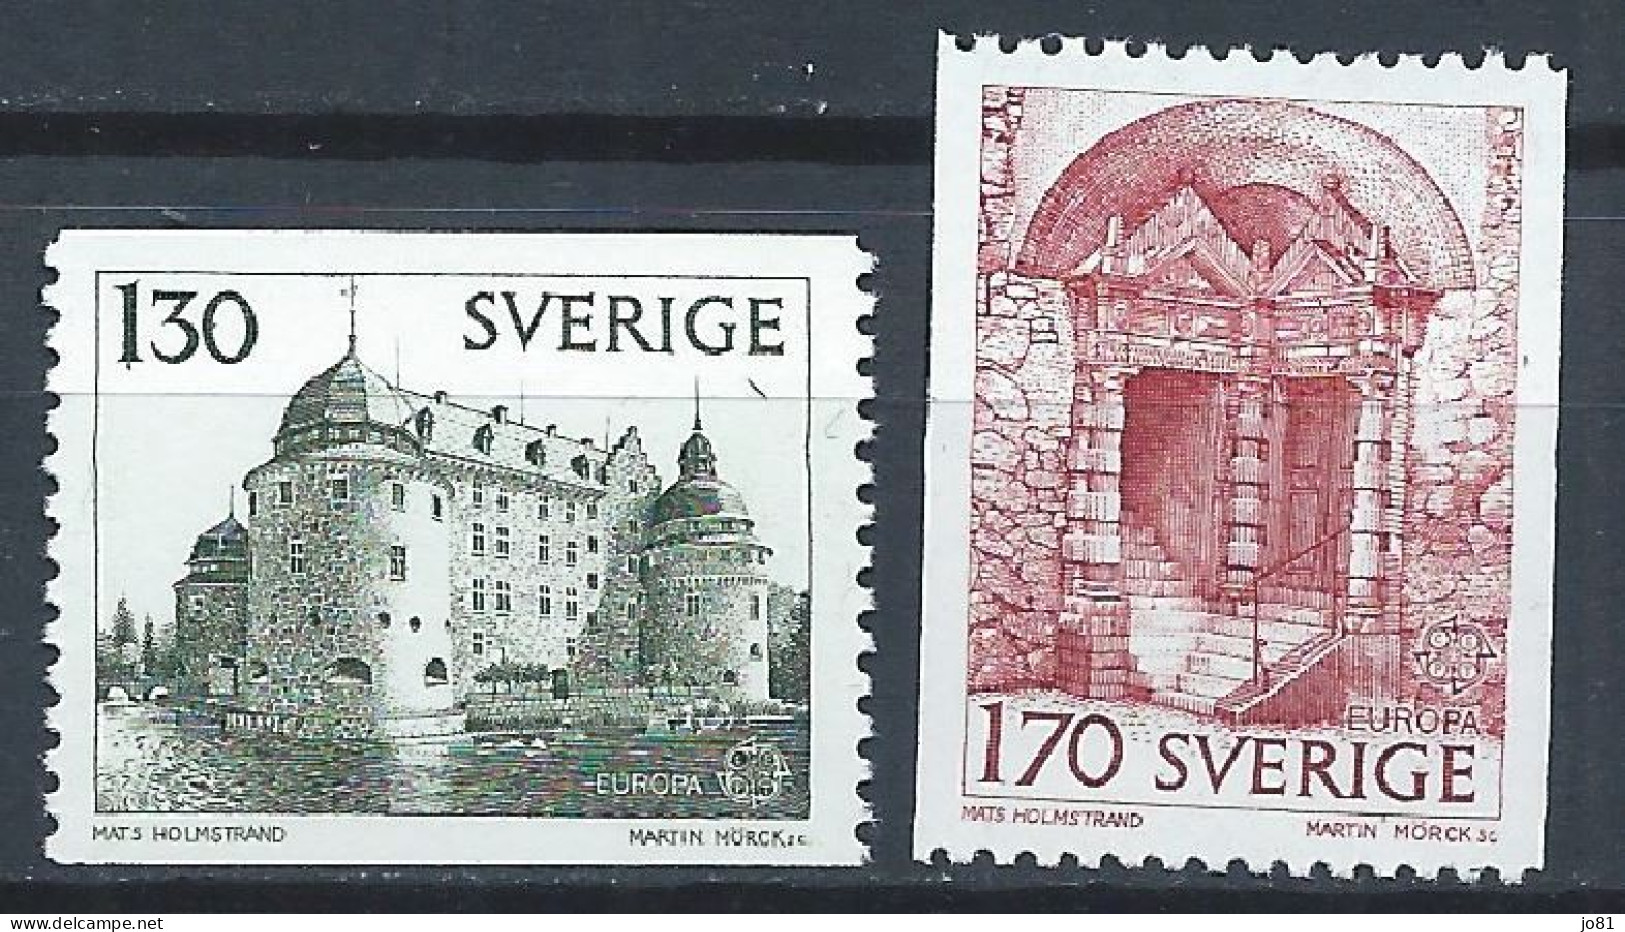 Suède YT 996-997 Neuf Sans Charnière XX MNH Europa 1978 - Neufs